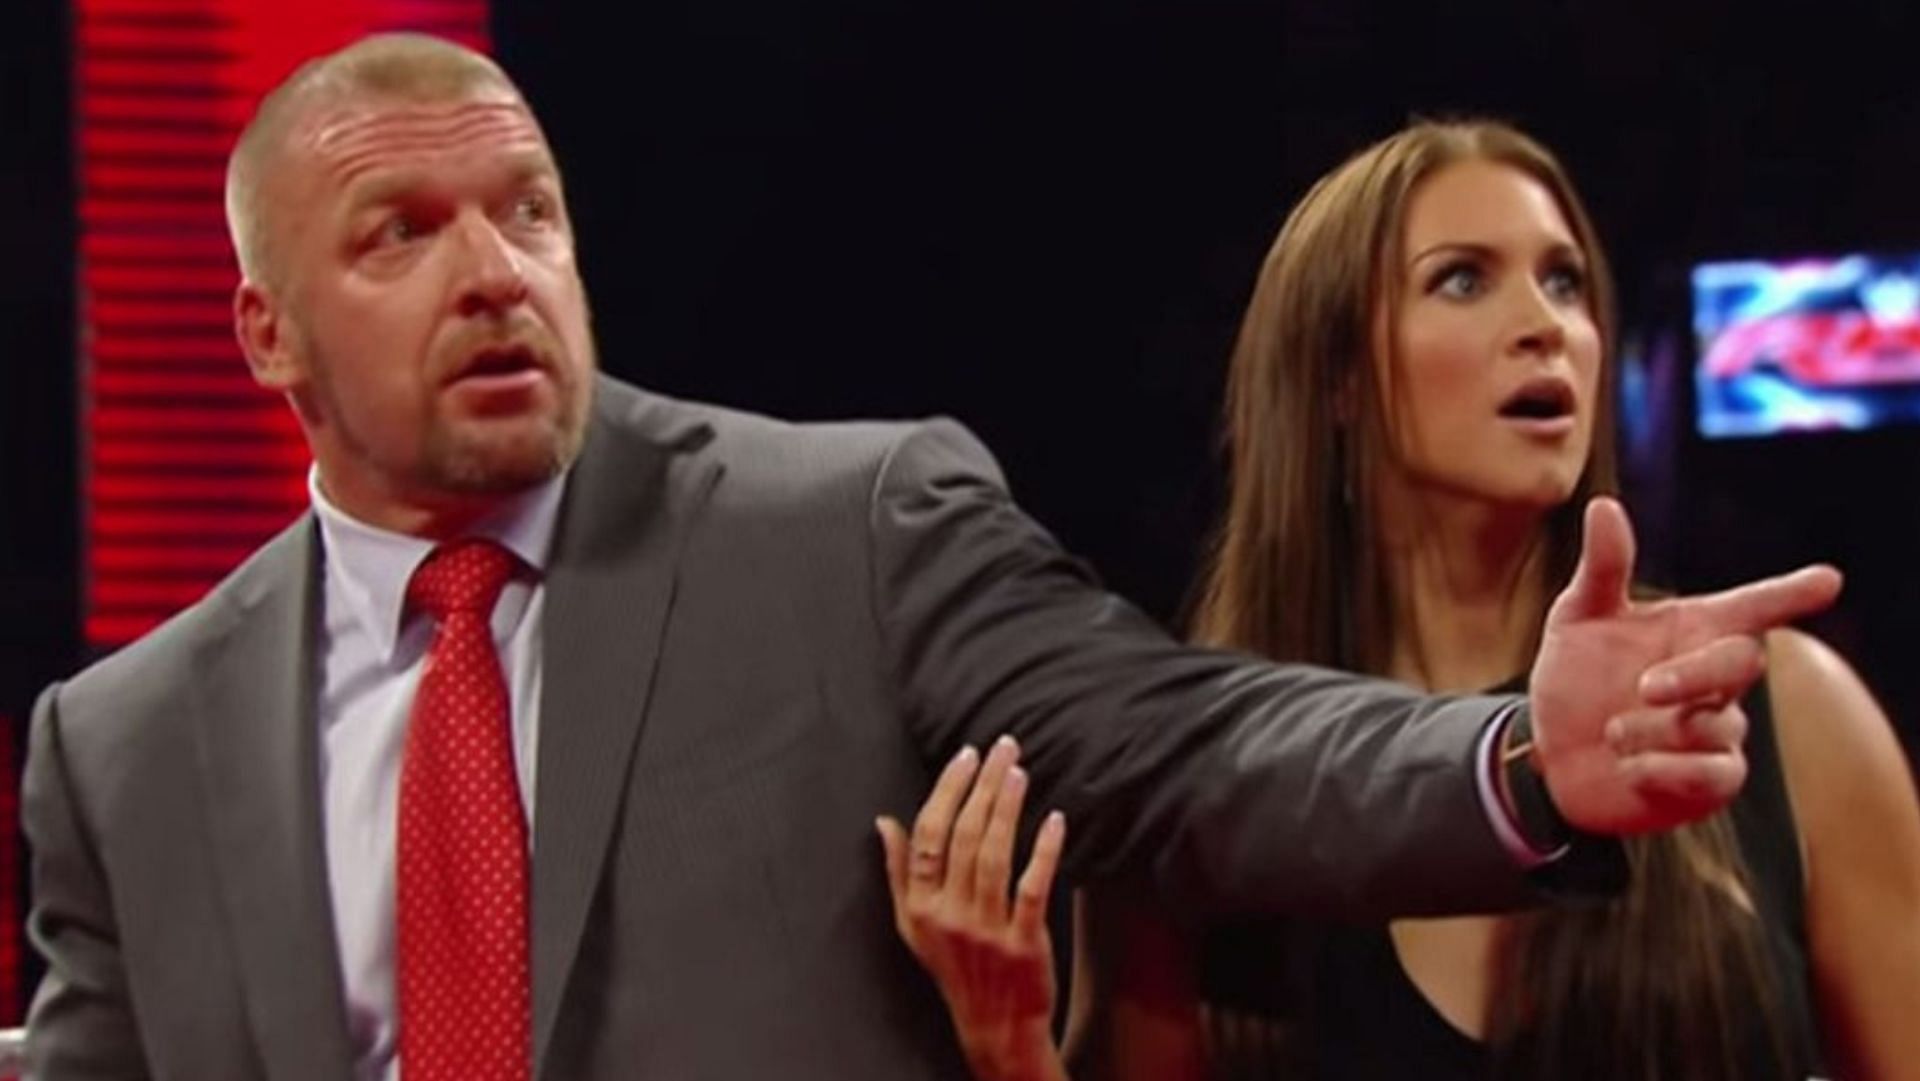 WWE Hall of Famer Triple H and Stephanie McMahon